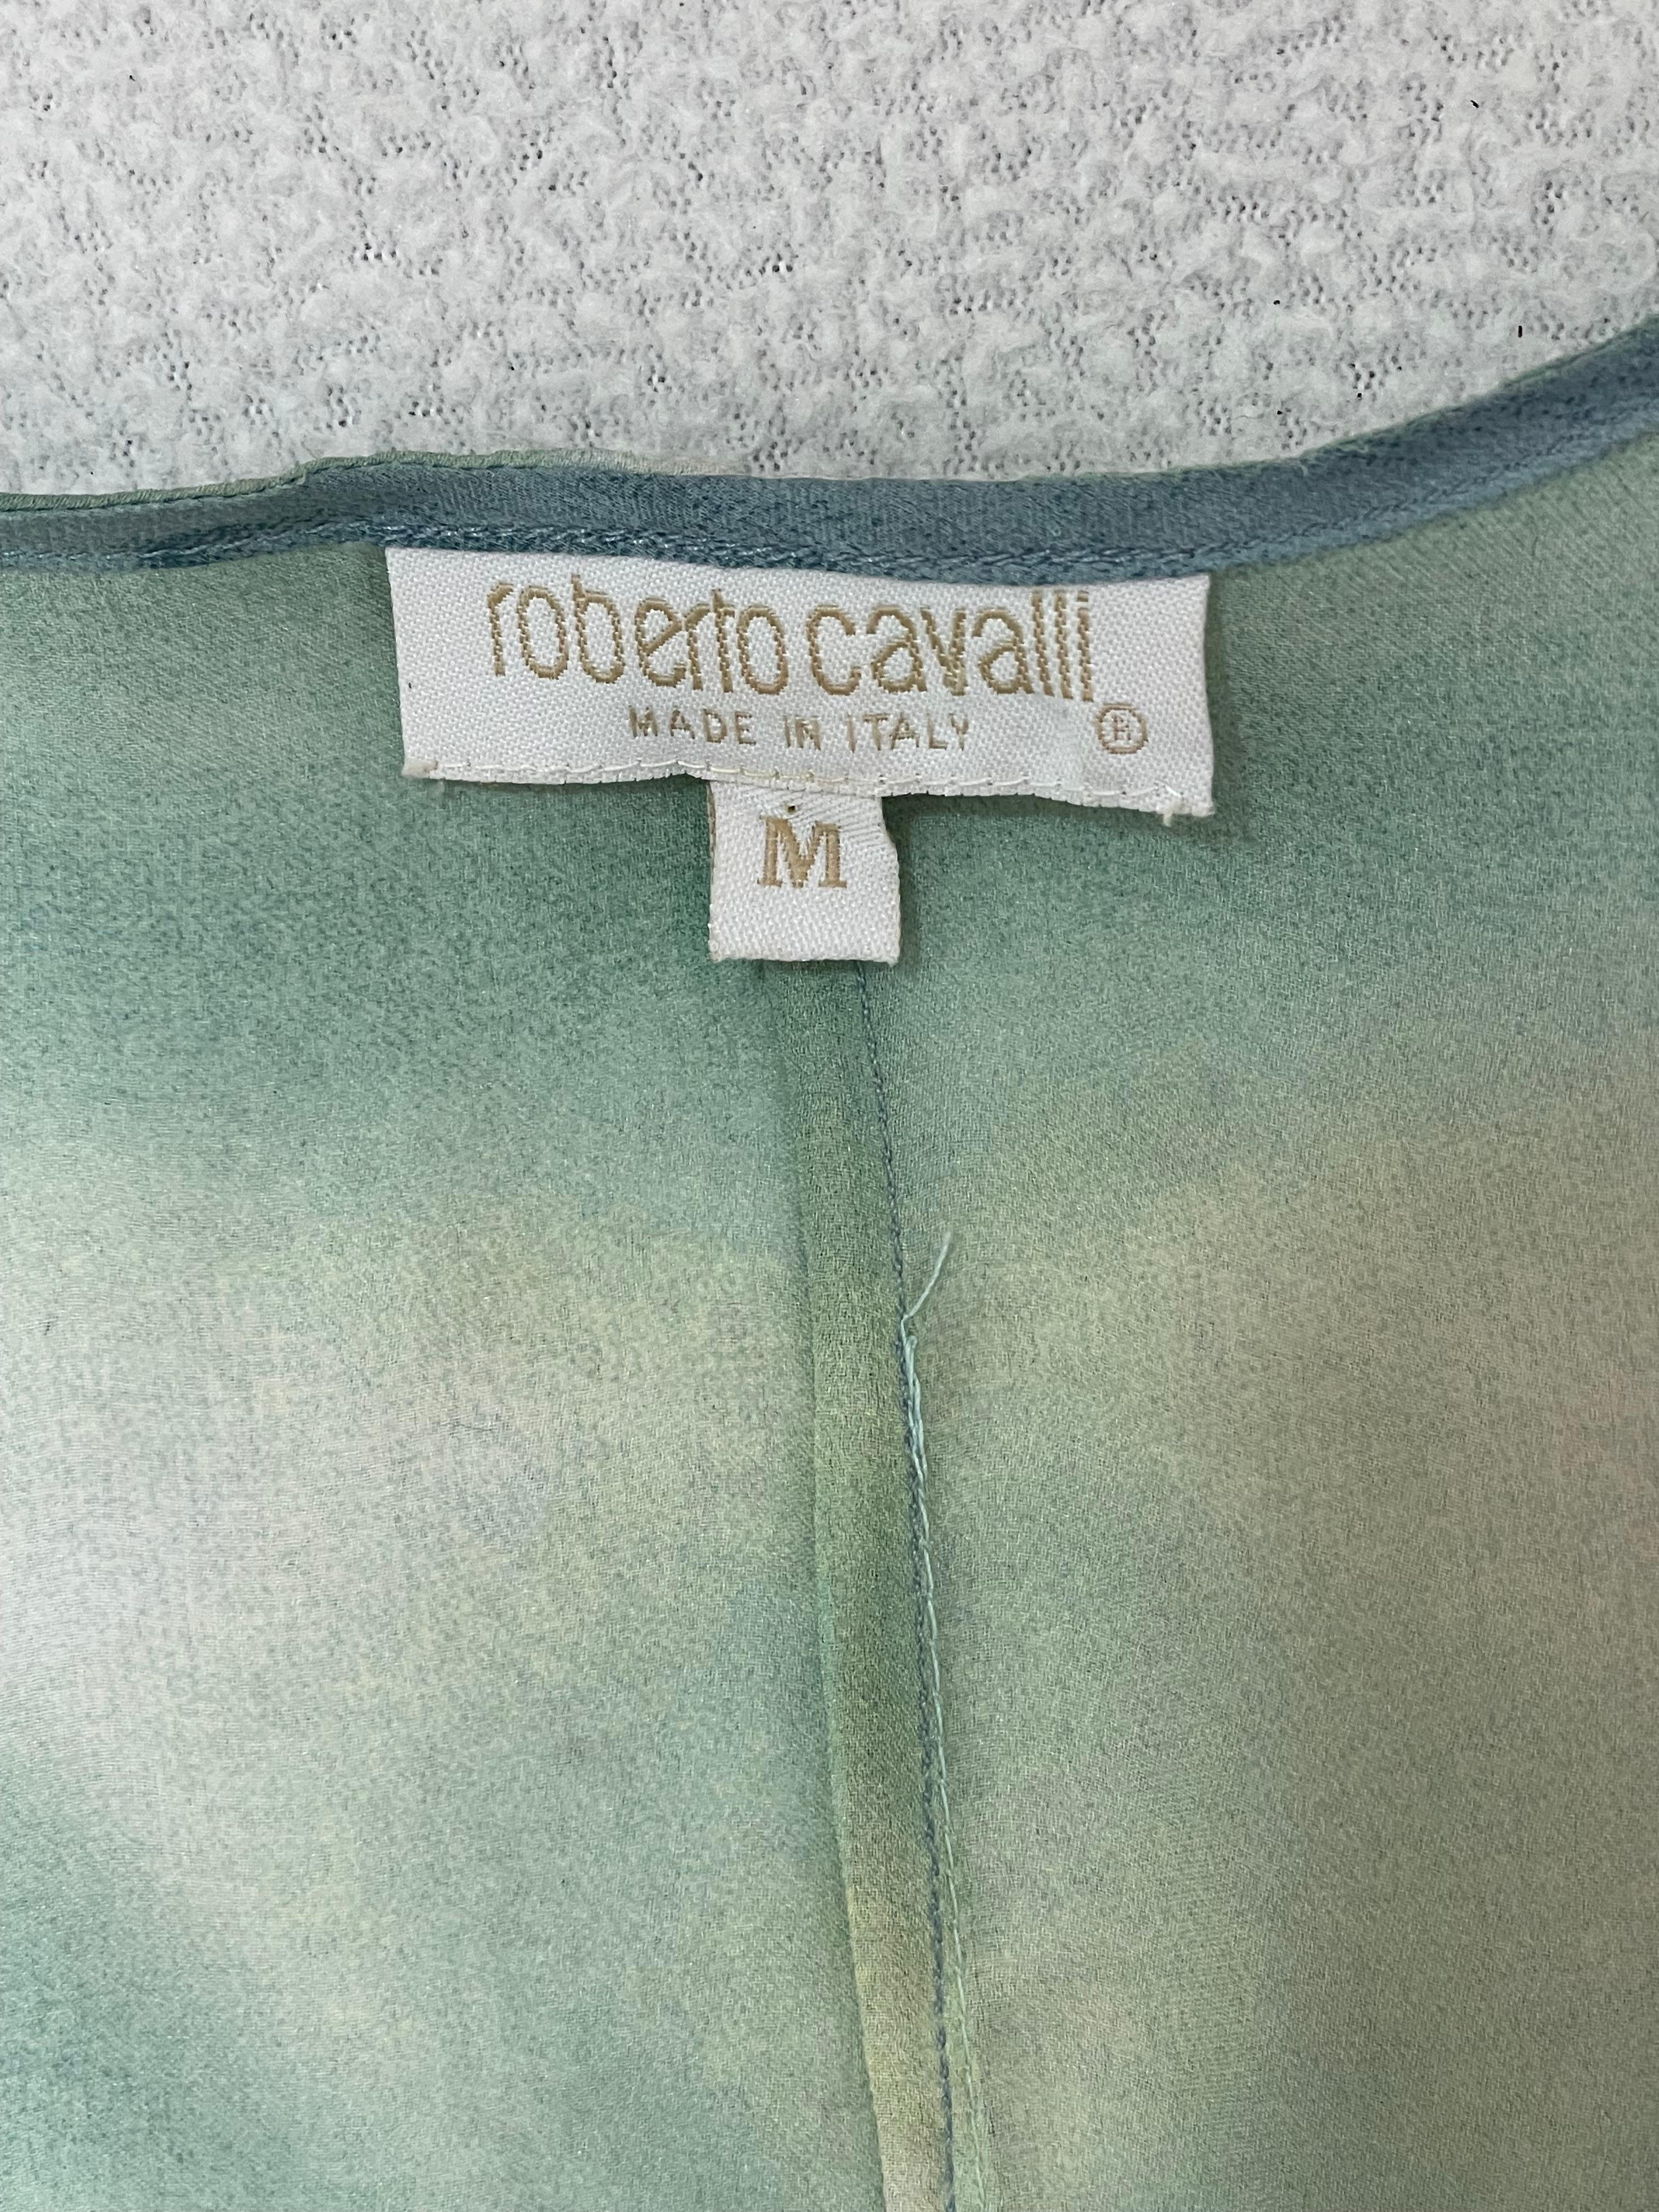 S/S 2001 Roberto Cavalli Sheer Blue Silk Plunging High Slit Maxi Dress 2